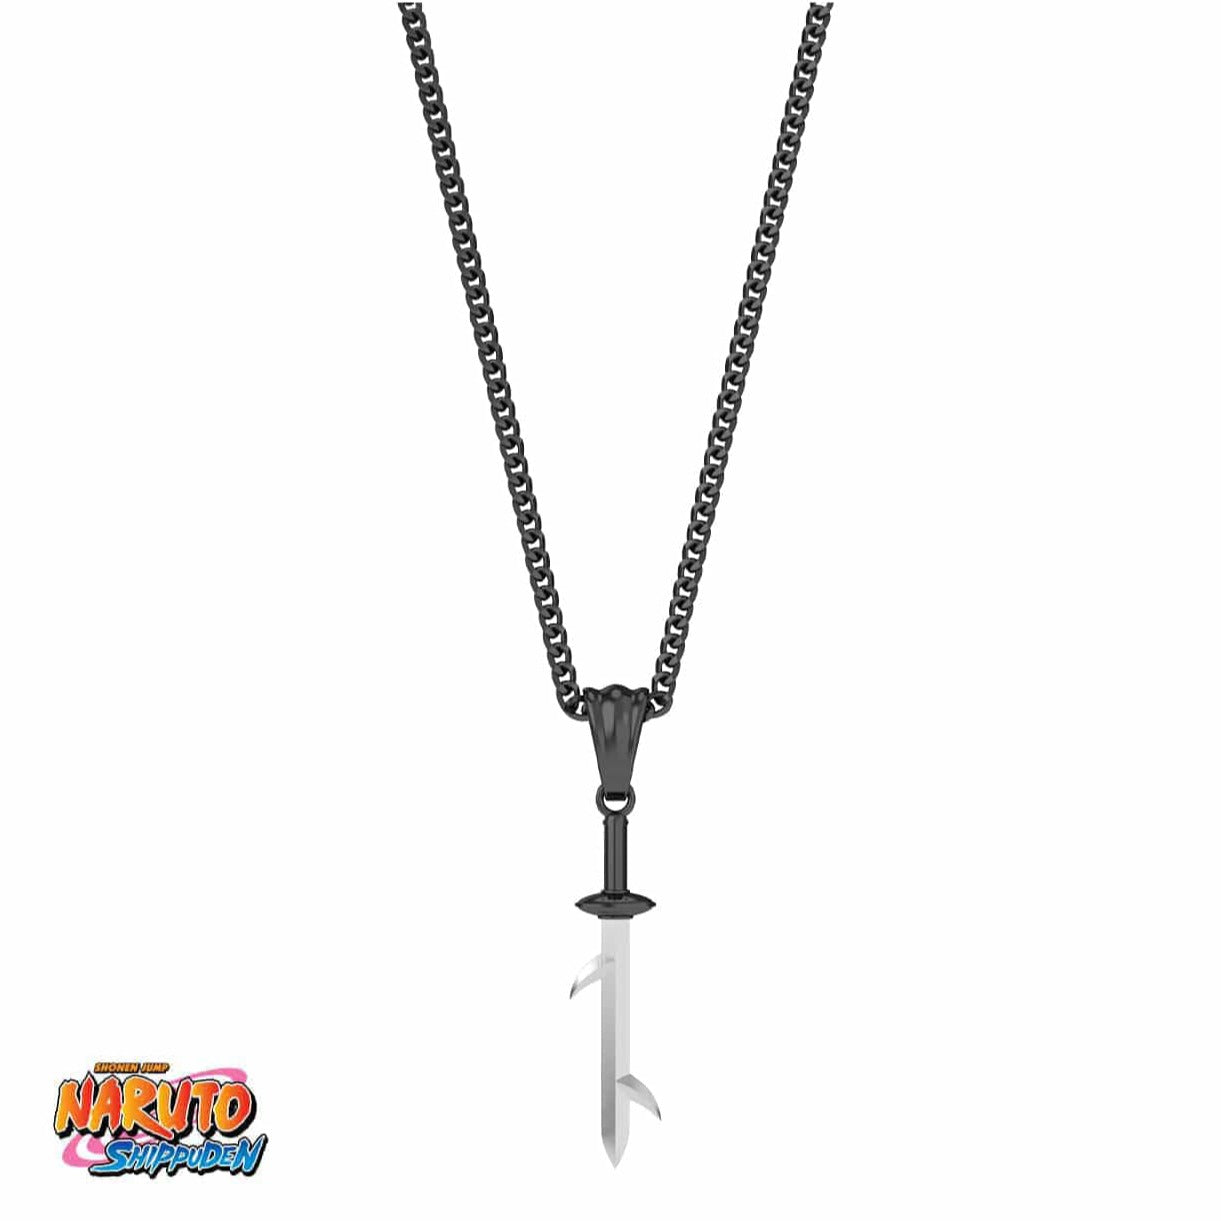 Naruto™ Fang Sword Necklace